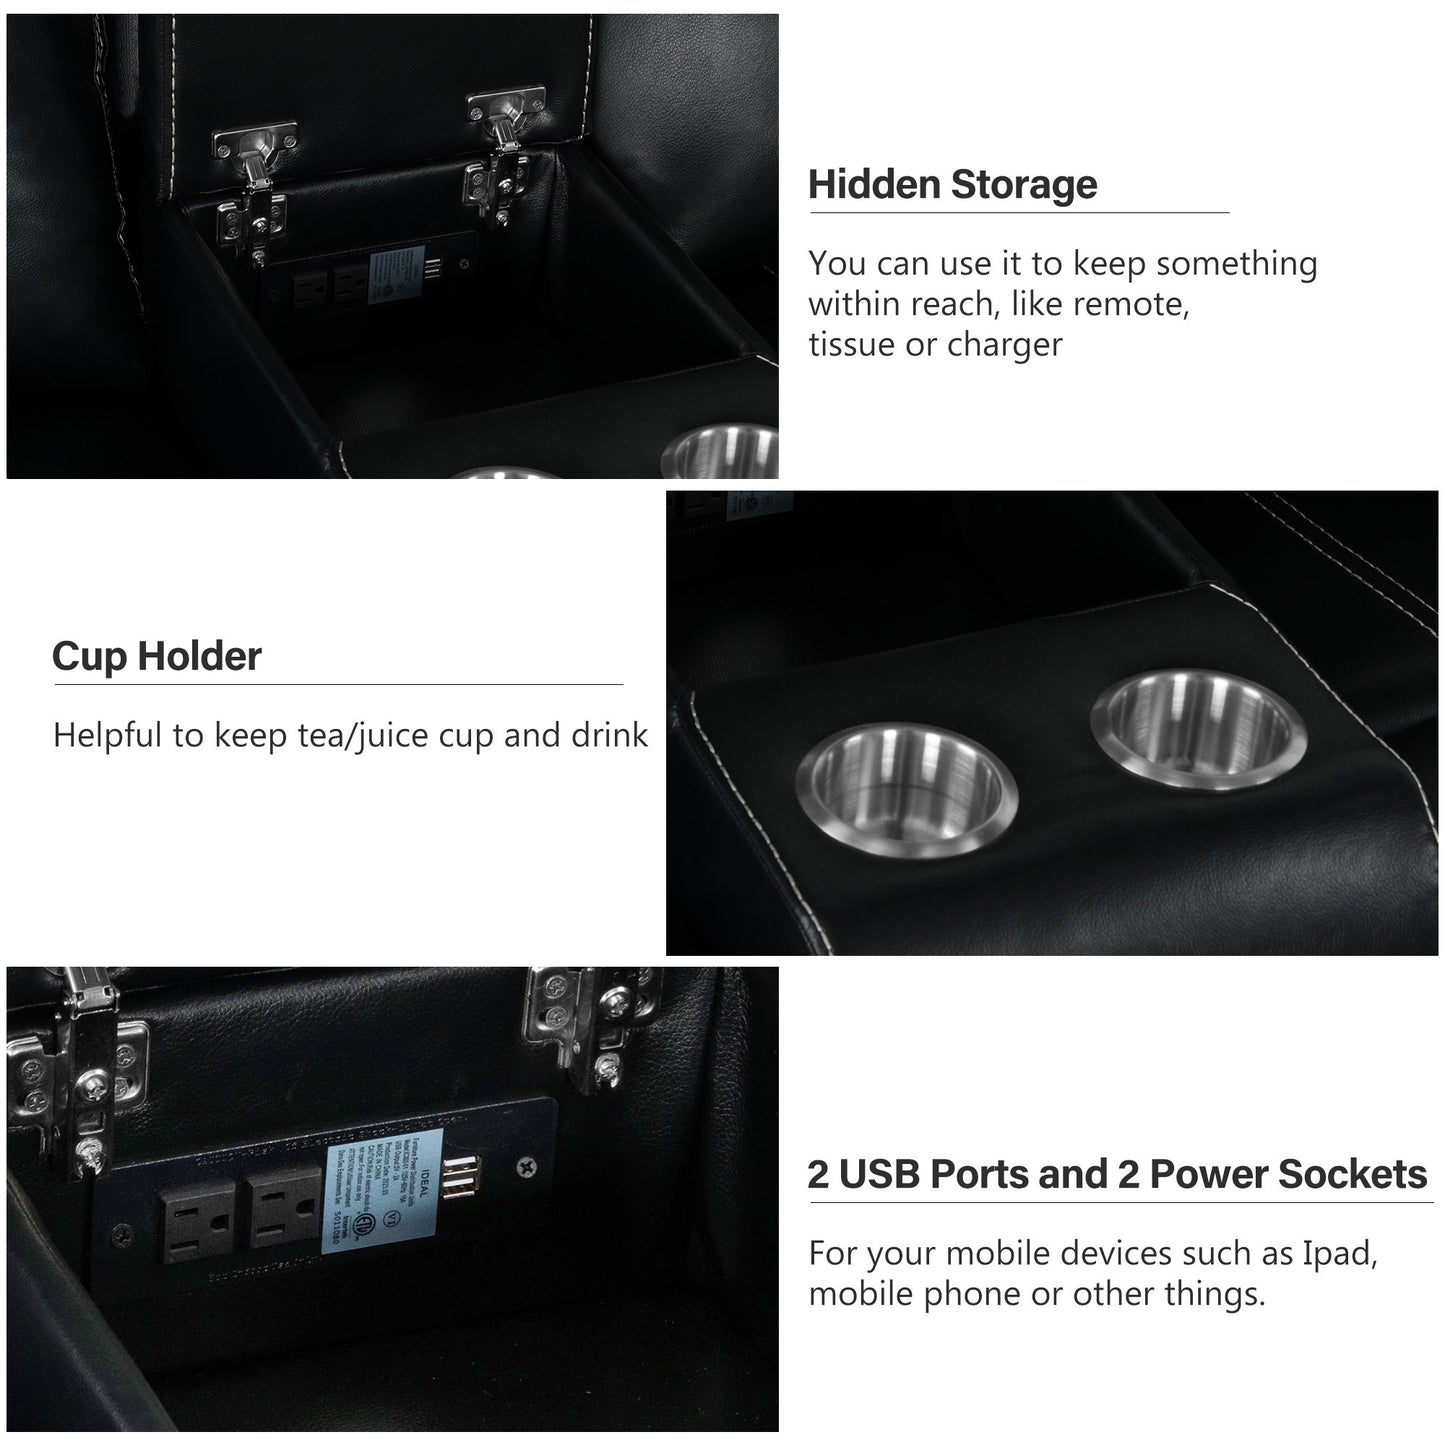 Recliner, Cup Holder, Storage, 2 USB Ports, 2 Power Sockets